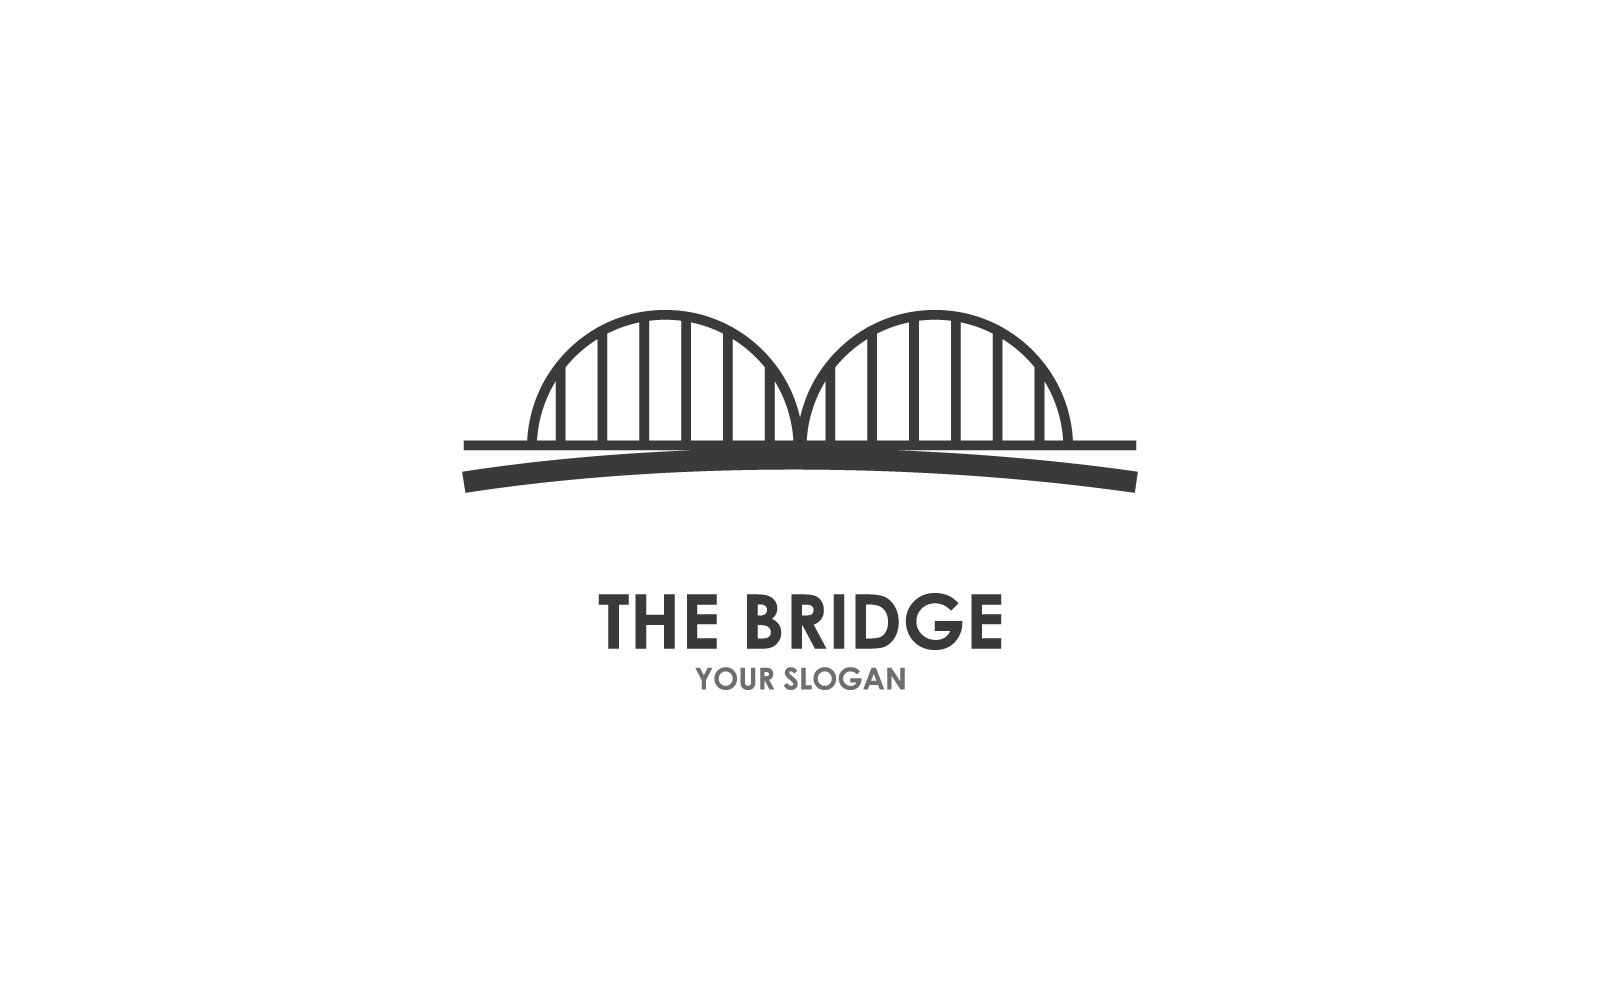 Bridge ilustration logo vector flat design template